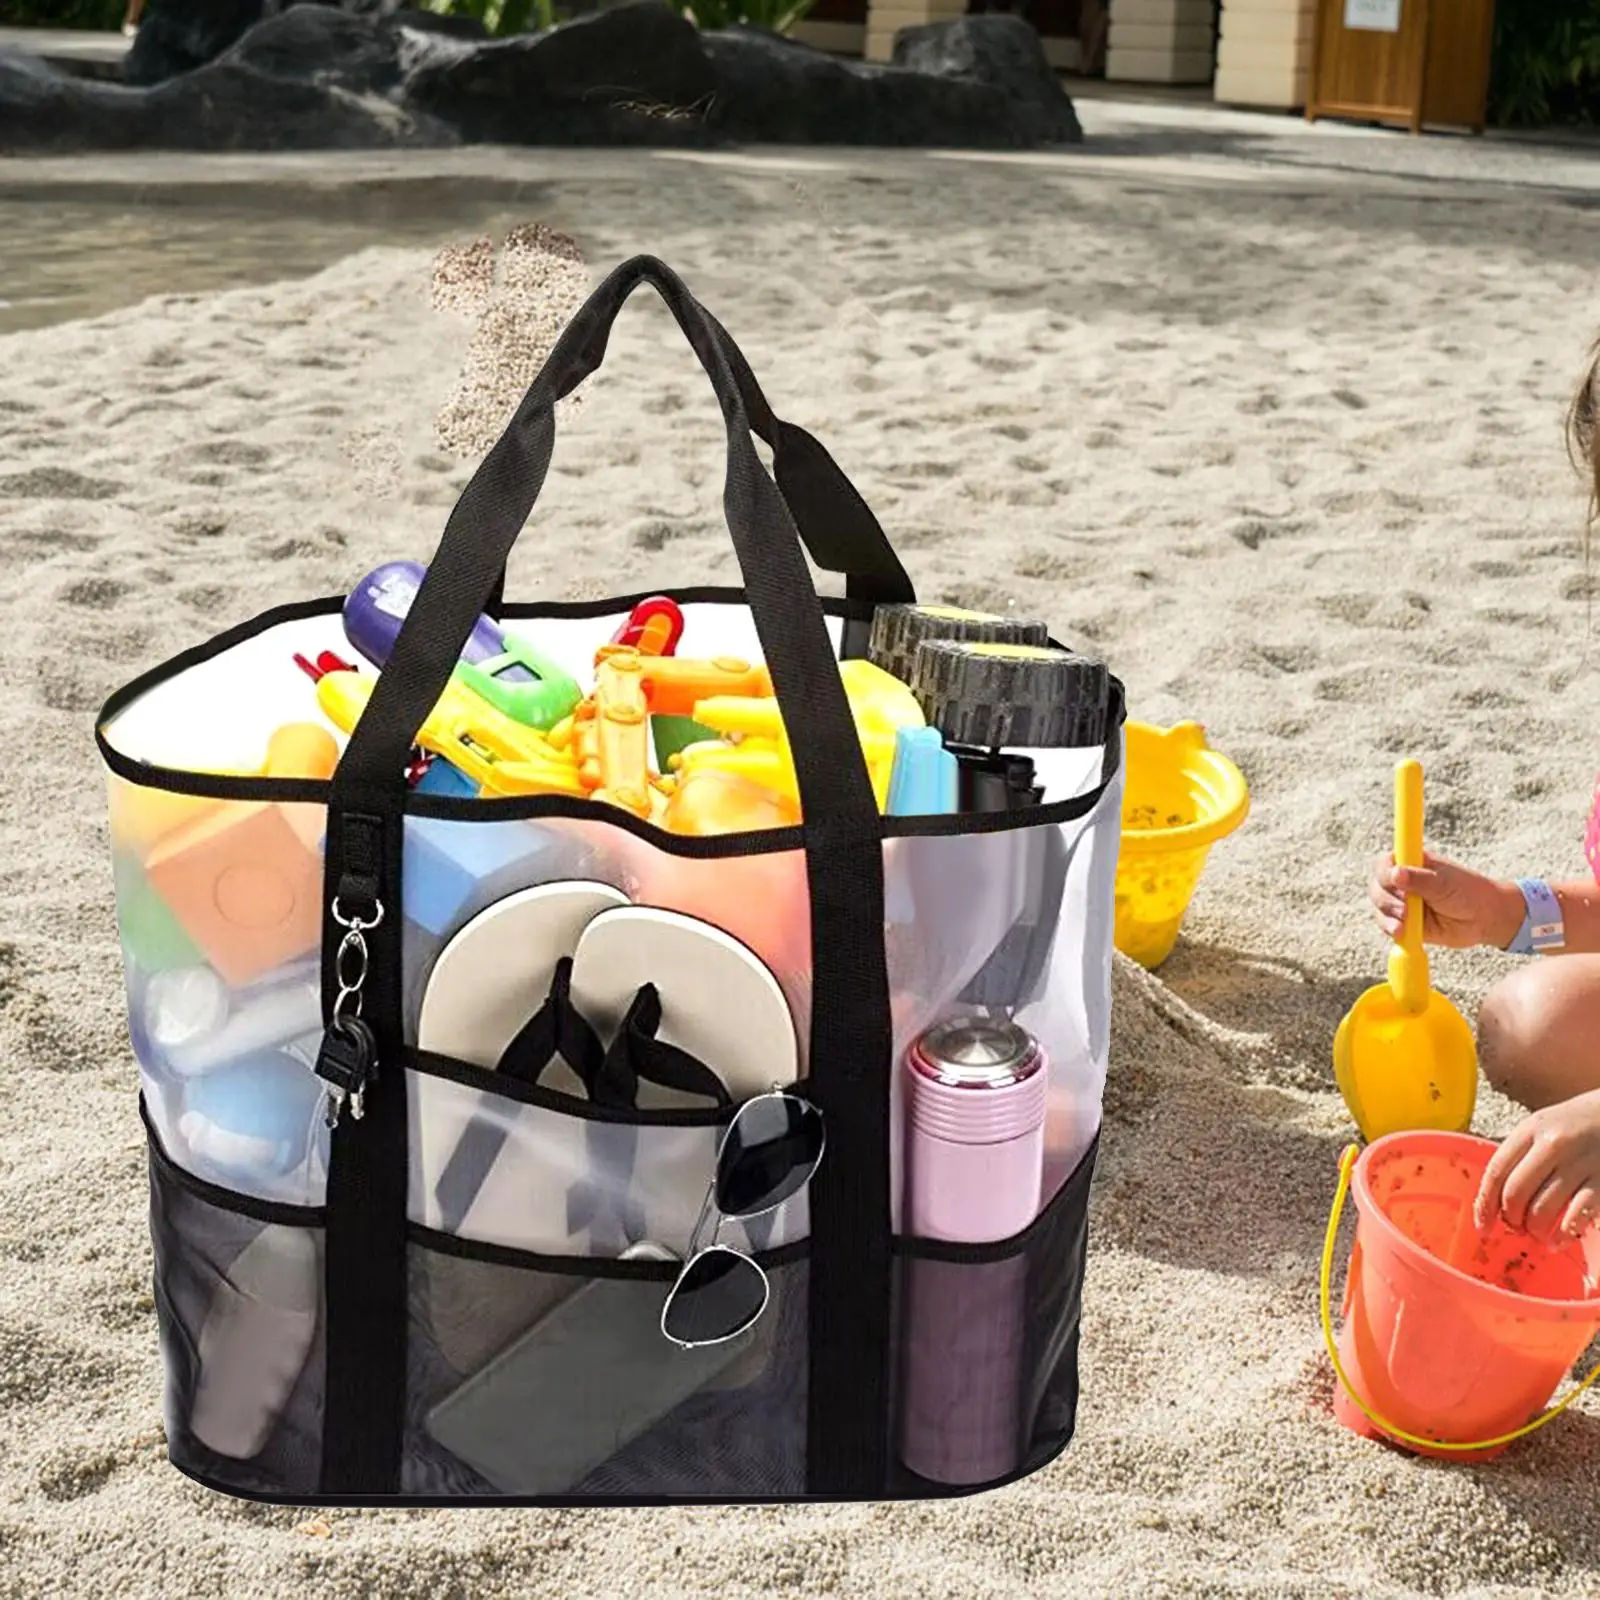 Mesh Beach Bag Tote Bag Gym Bag Large Kids Toy Bag Towels Storage Bag Cosmetic Storage Bag for Outdoor Sports Travel